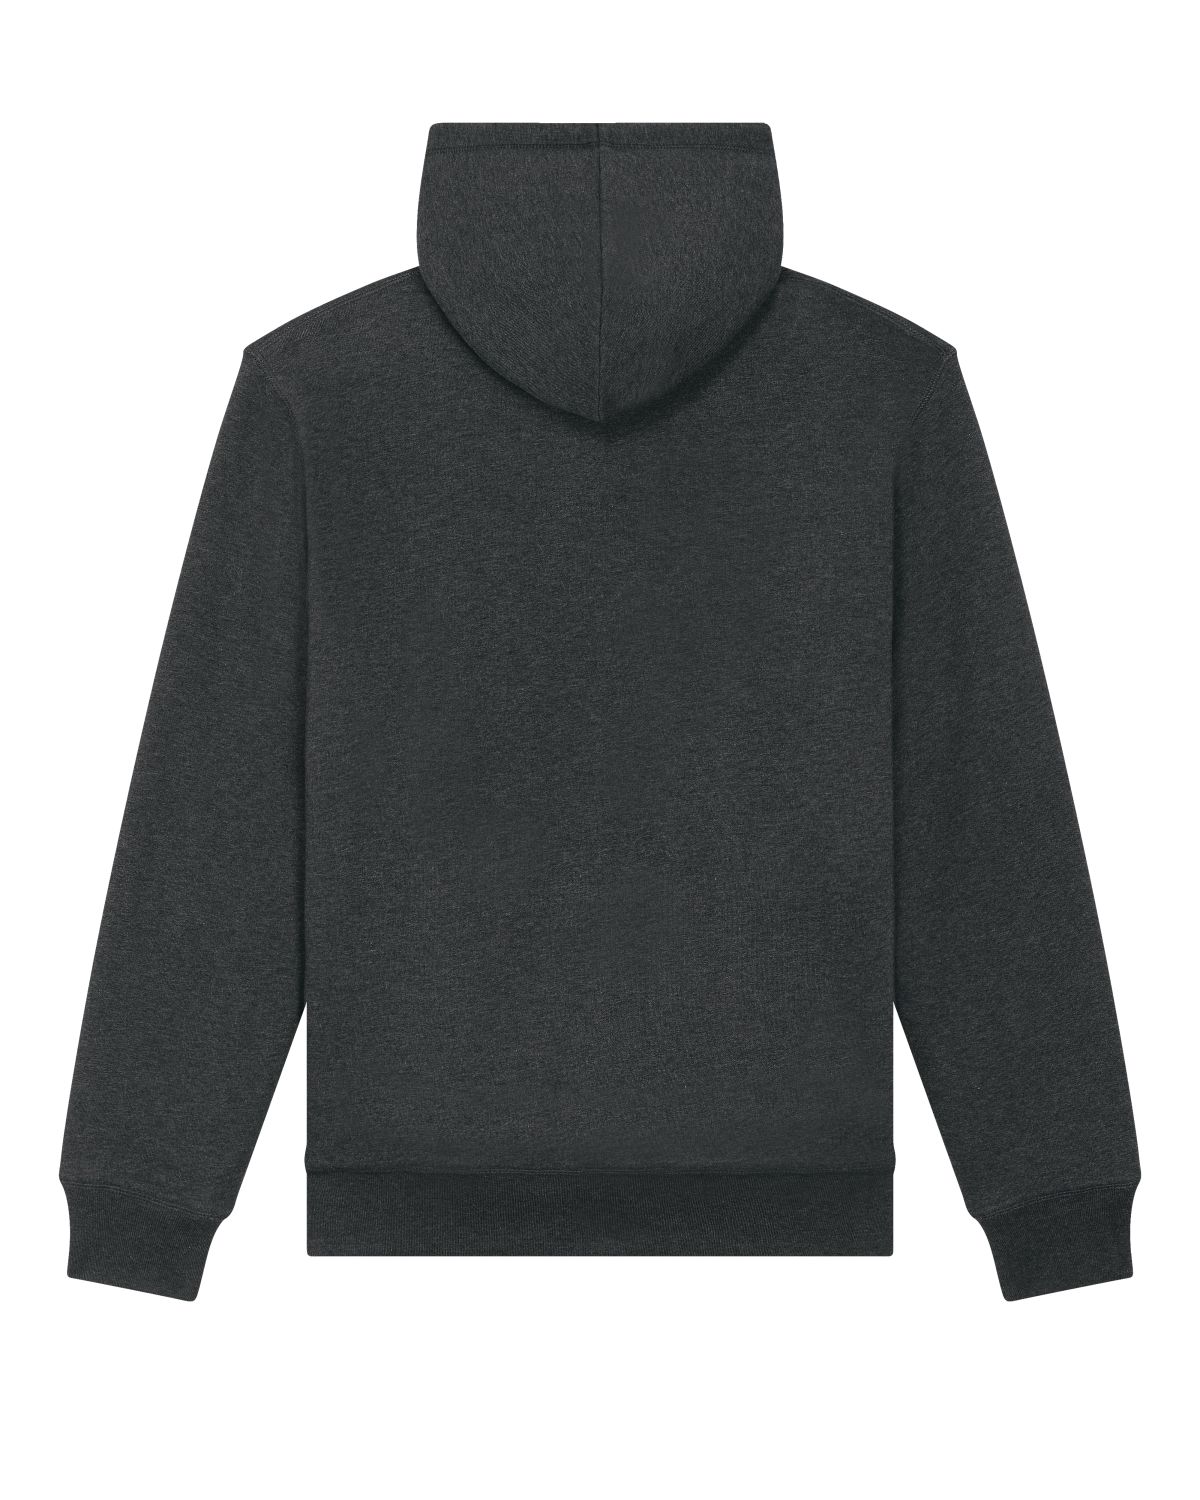 Stanley Workwear Jacket Sherpa Lined Hooded men medium